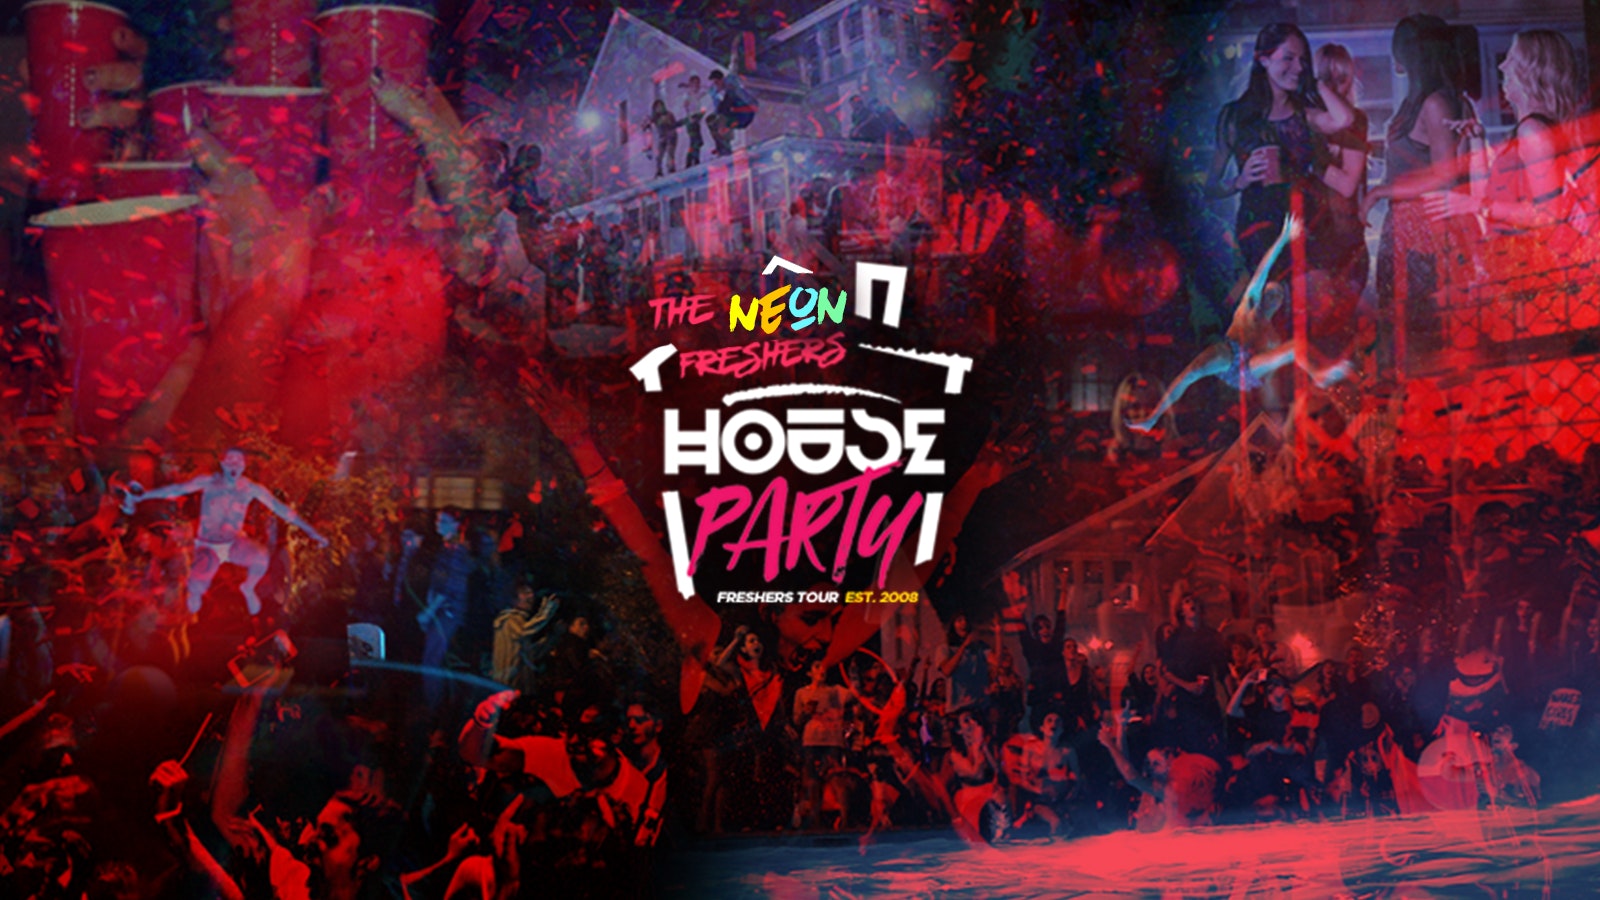 Neon Freshers House Party | Durham Freshers 2021